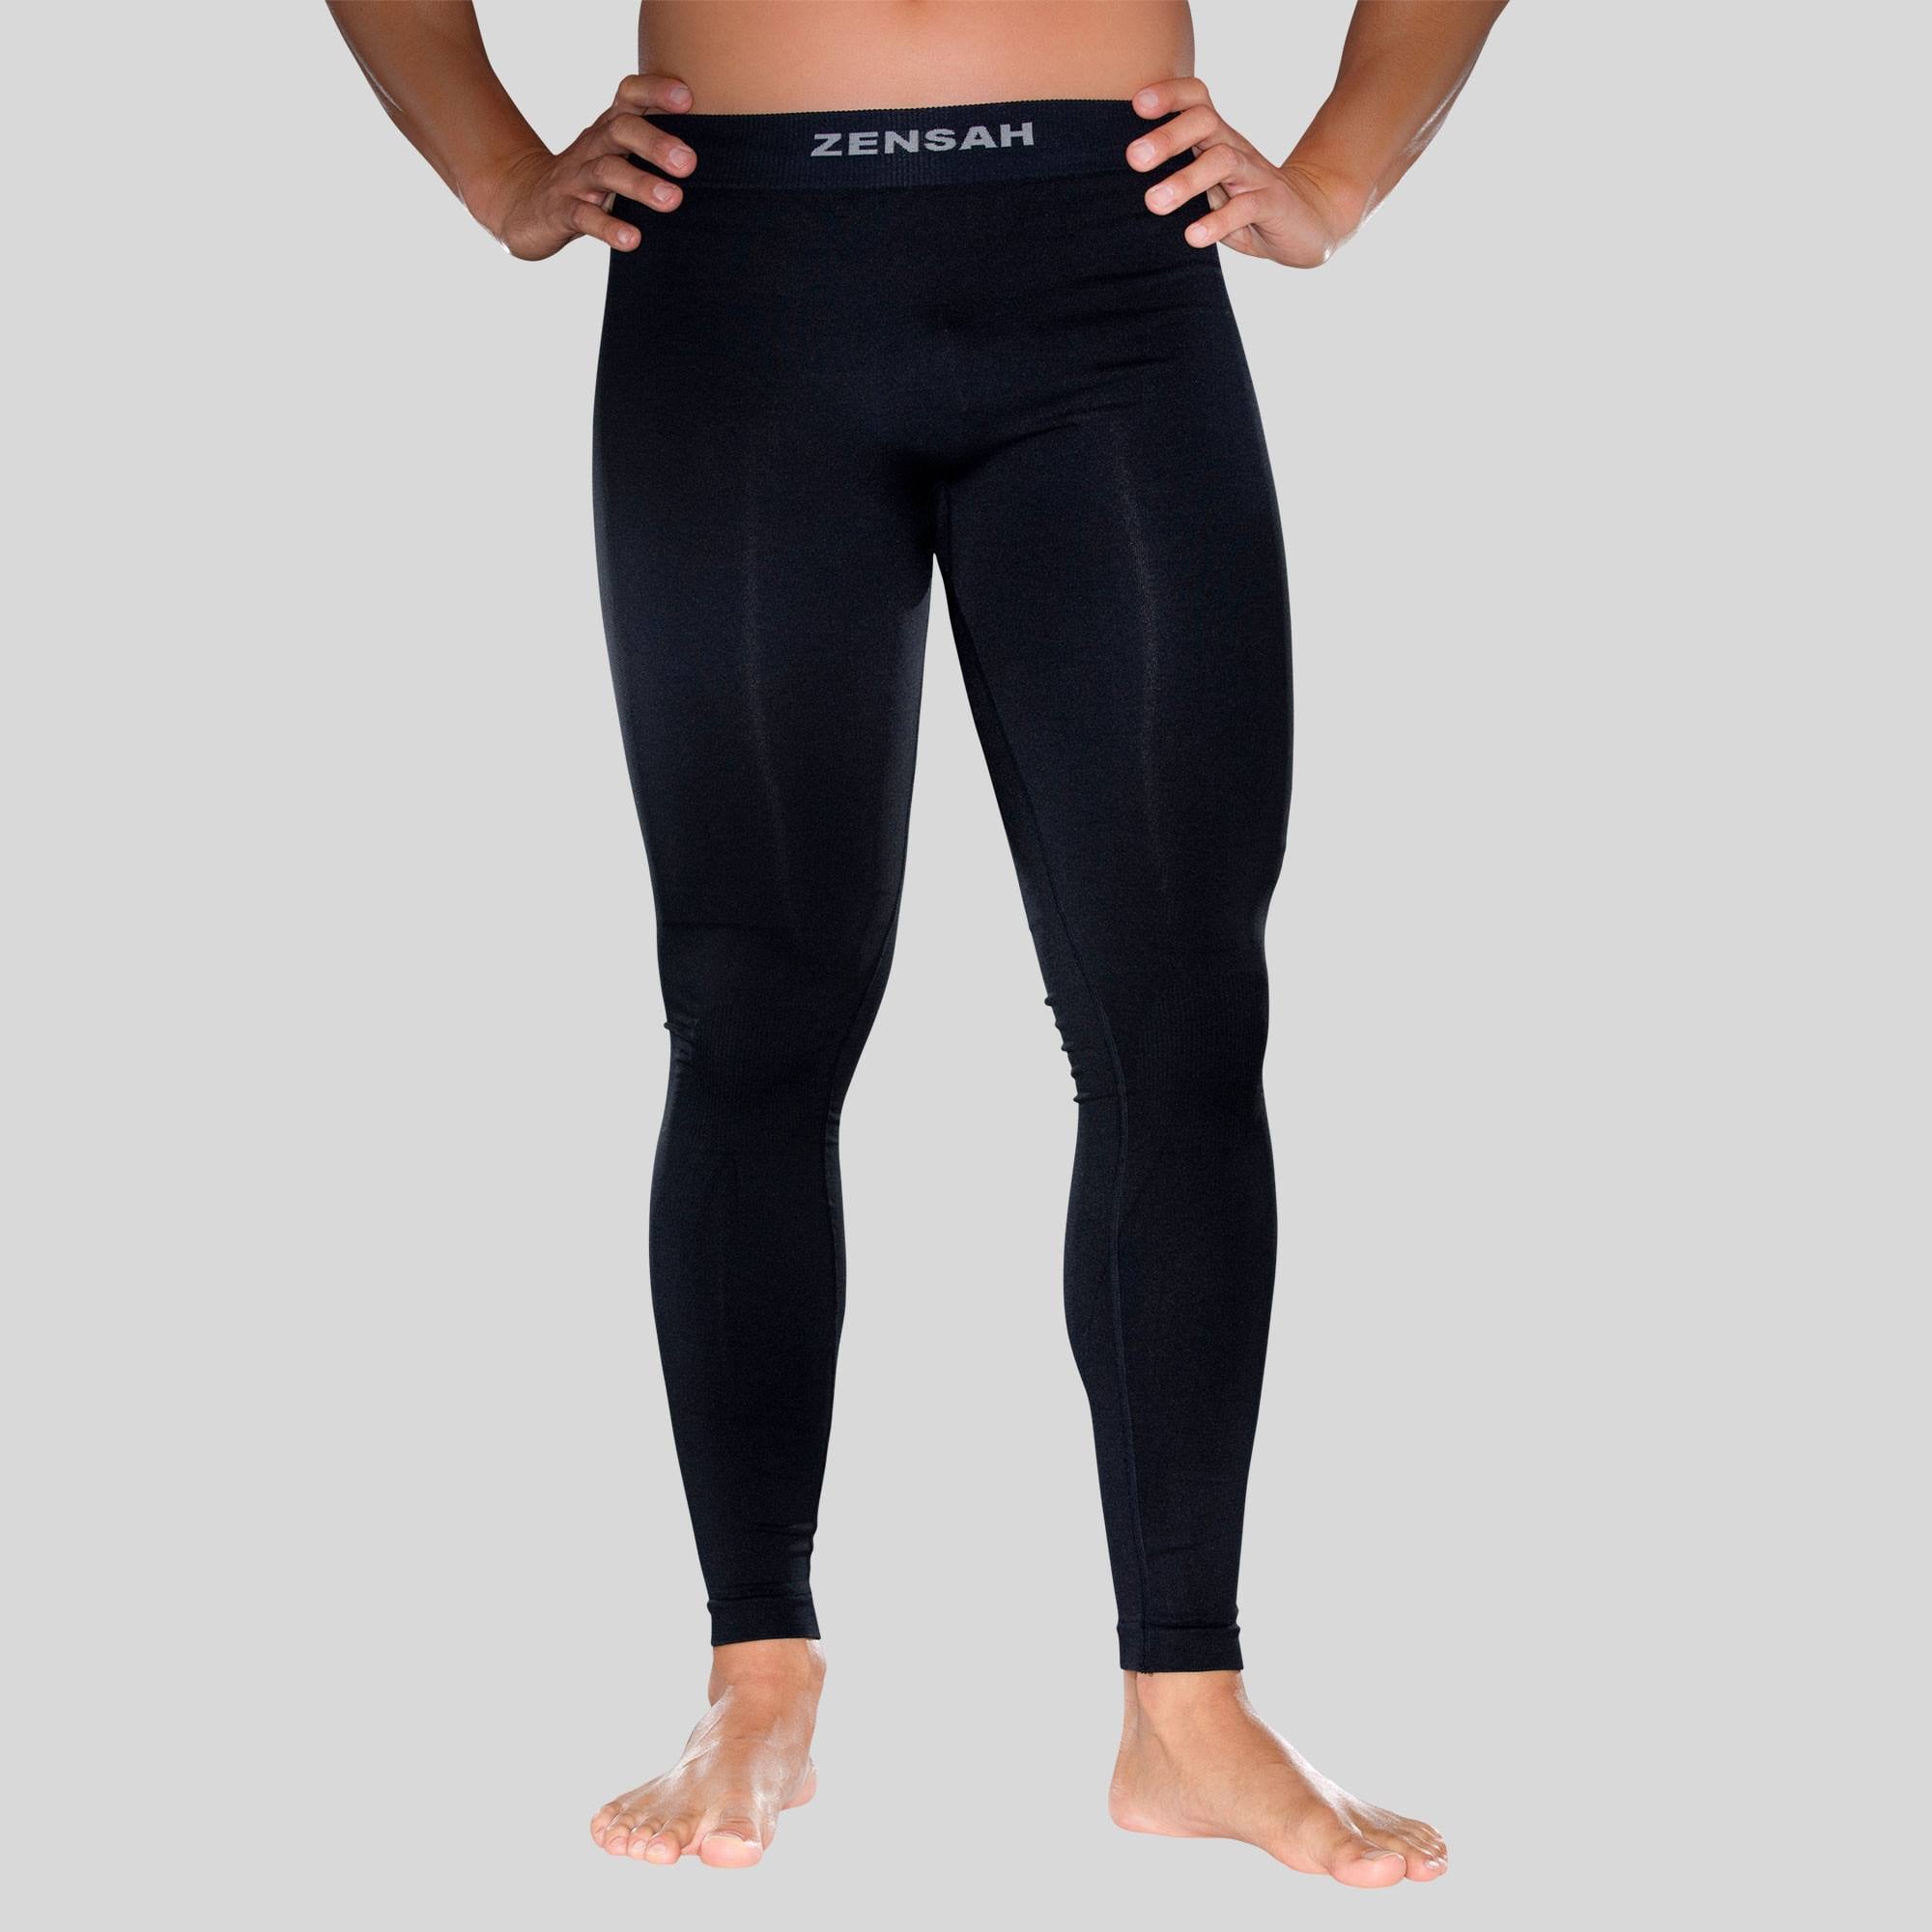 veidoorn 1pc/2pcs Men's High Elasticity Compression Pants For Fitness,  Basketball Base Layer, 7/8 Length